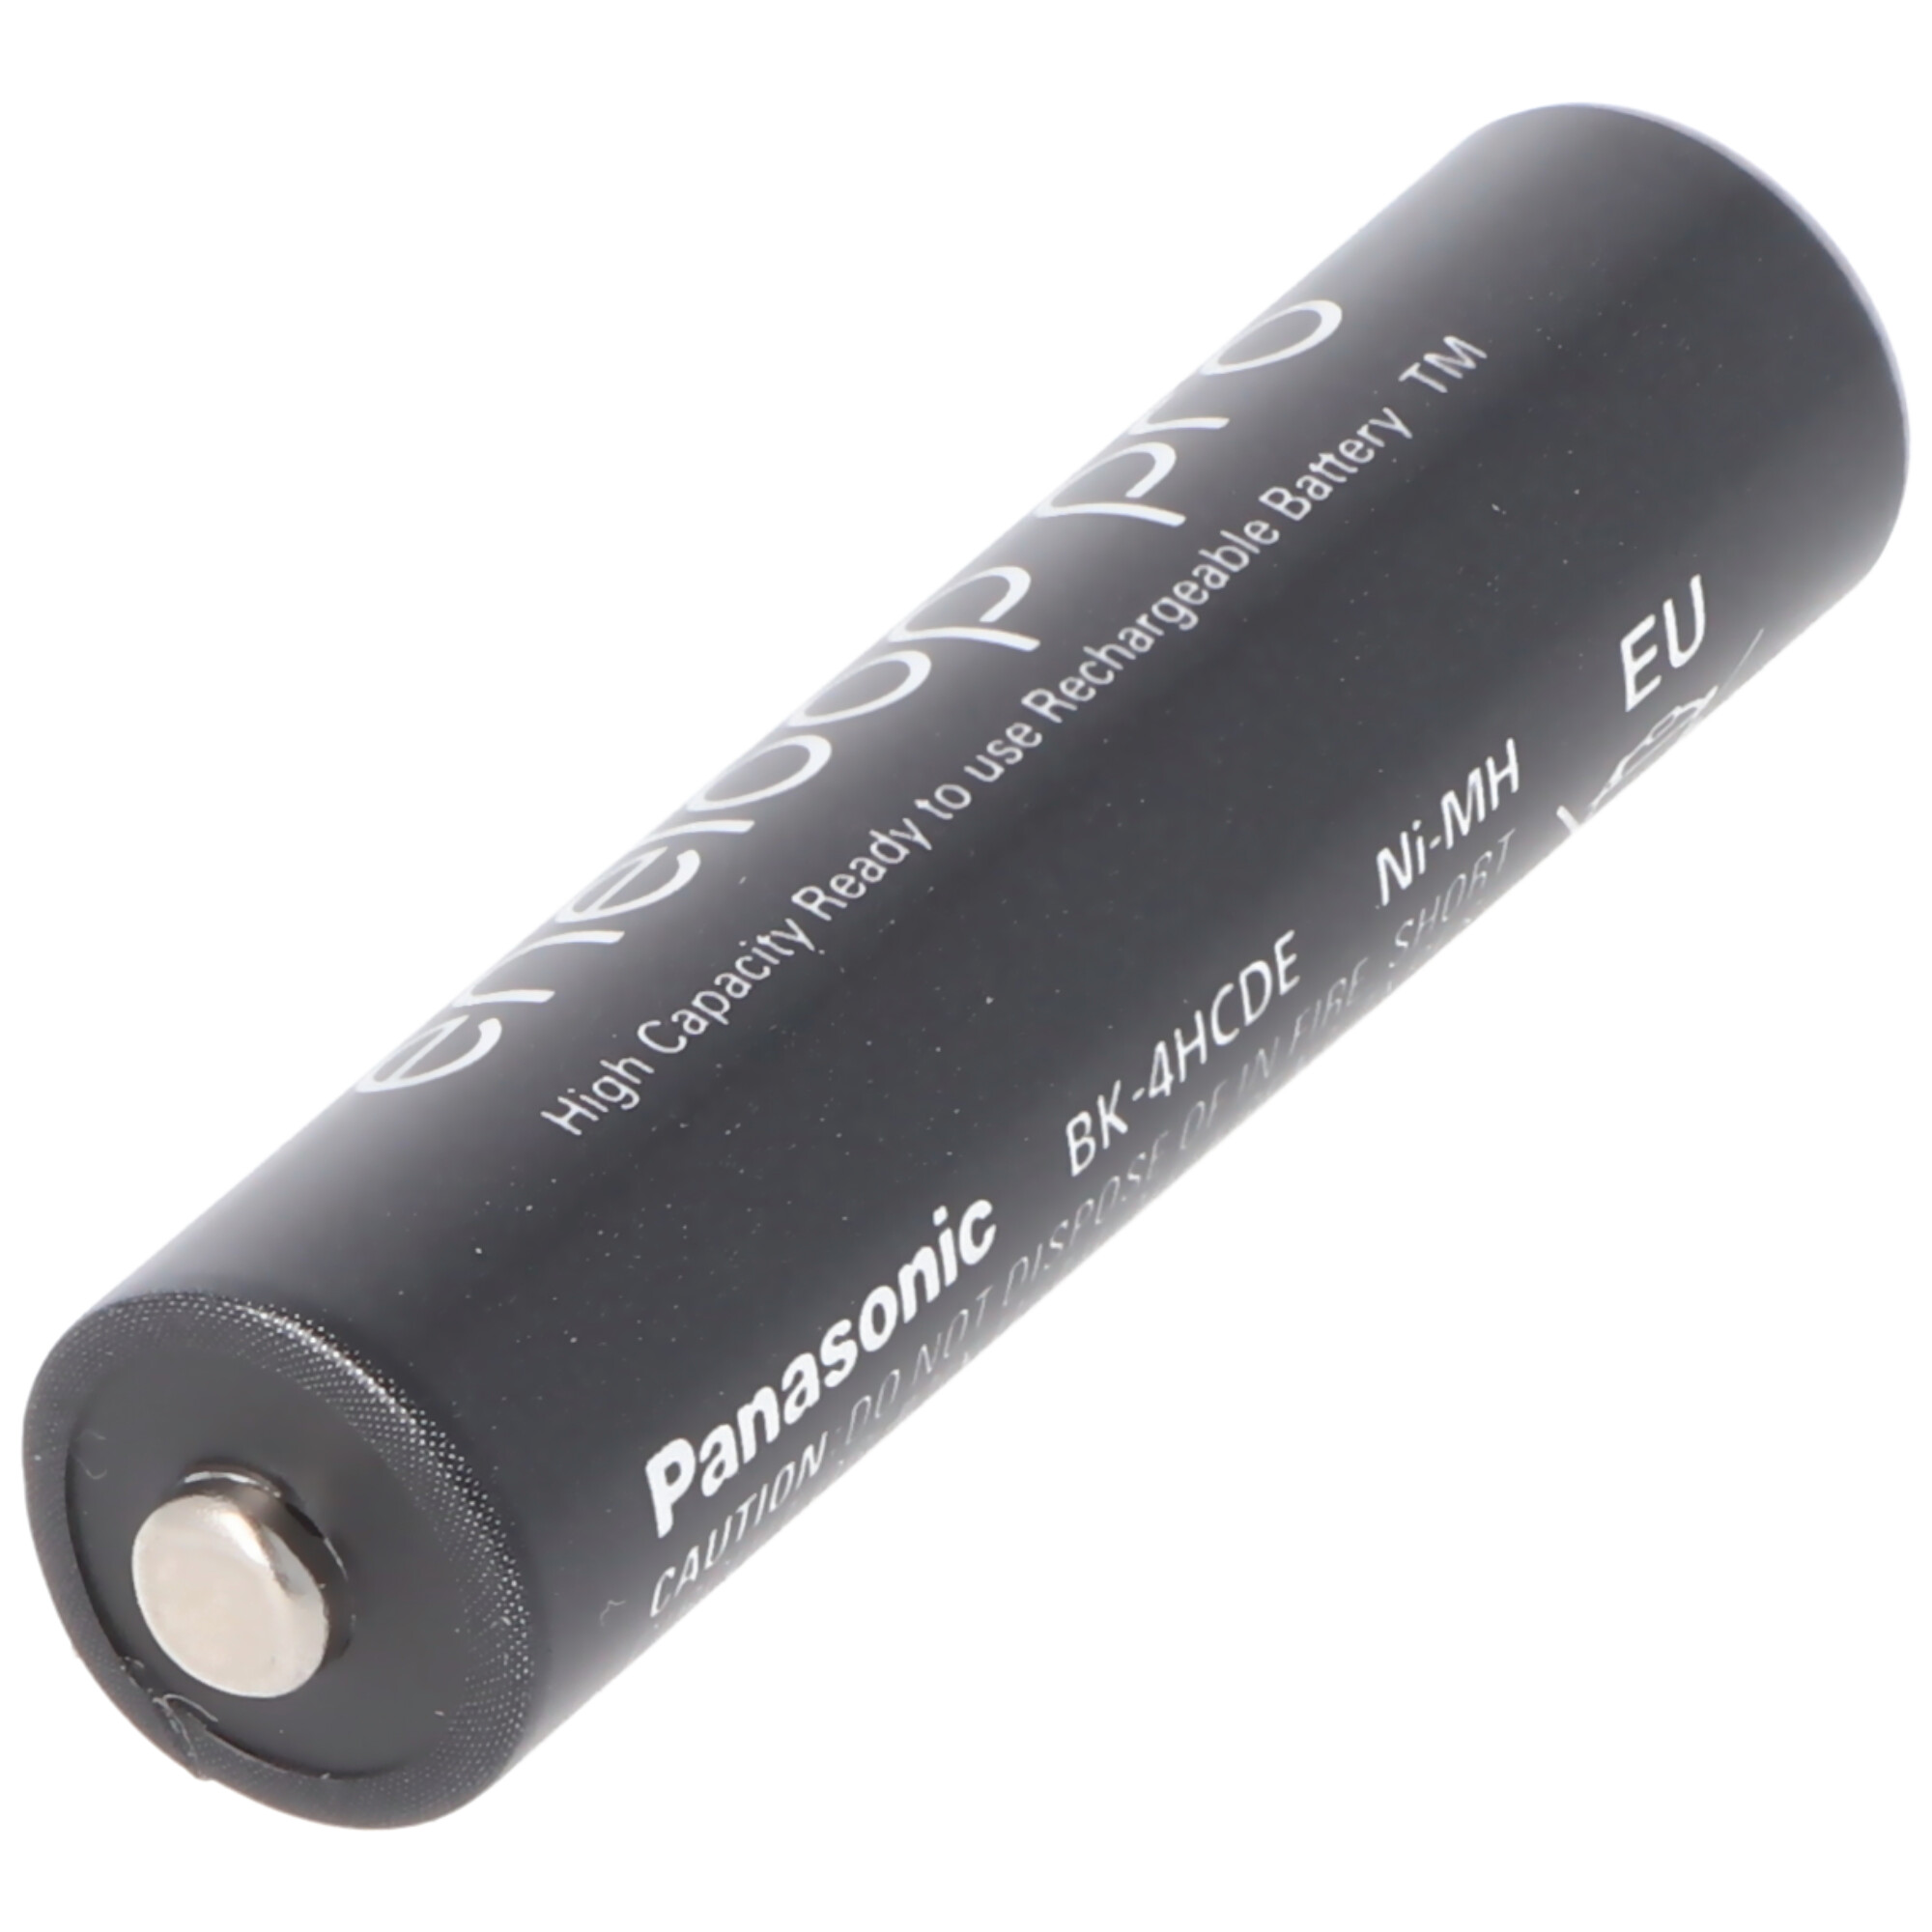 Panasonic eneloop Pro, Ready-to-Use Ni-MH Akku, AAA Micro, min. 930 mAh, 500 Ladezyklen mit AccuSafe